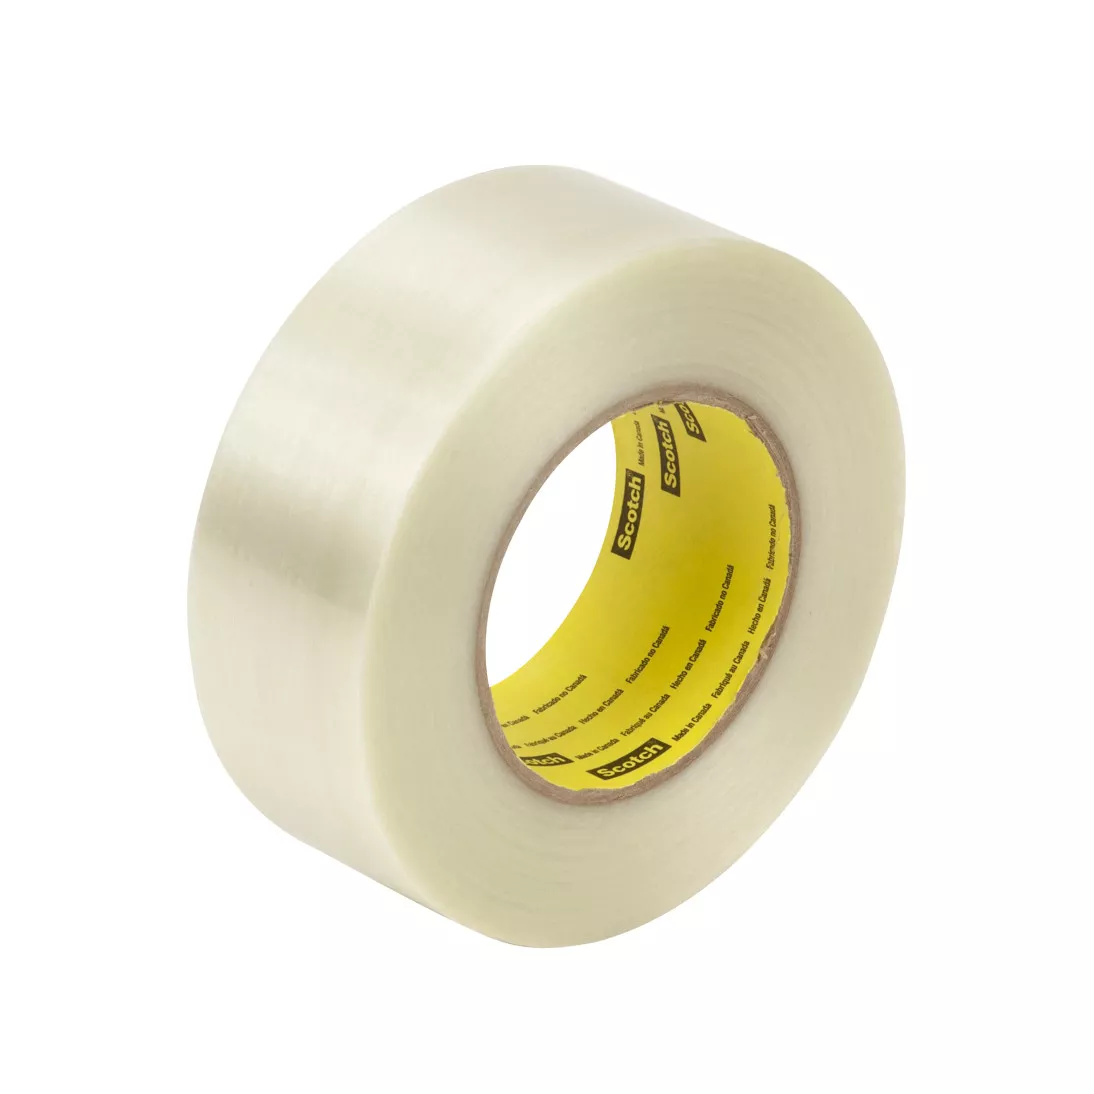 Scotch® Filament Tape 8919MSR, Clear, 288 mm x 100 m, 7 mil, 1 roll per
case